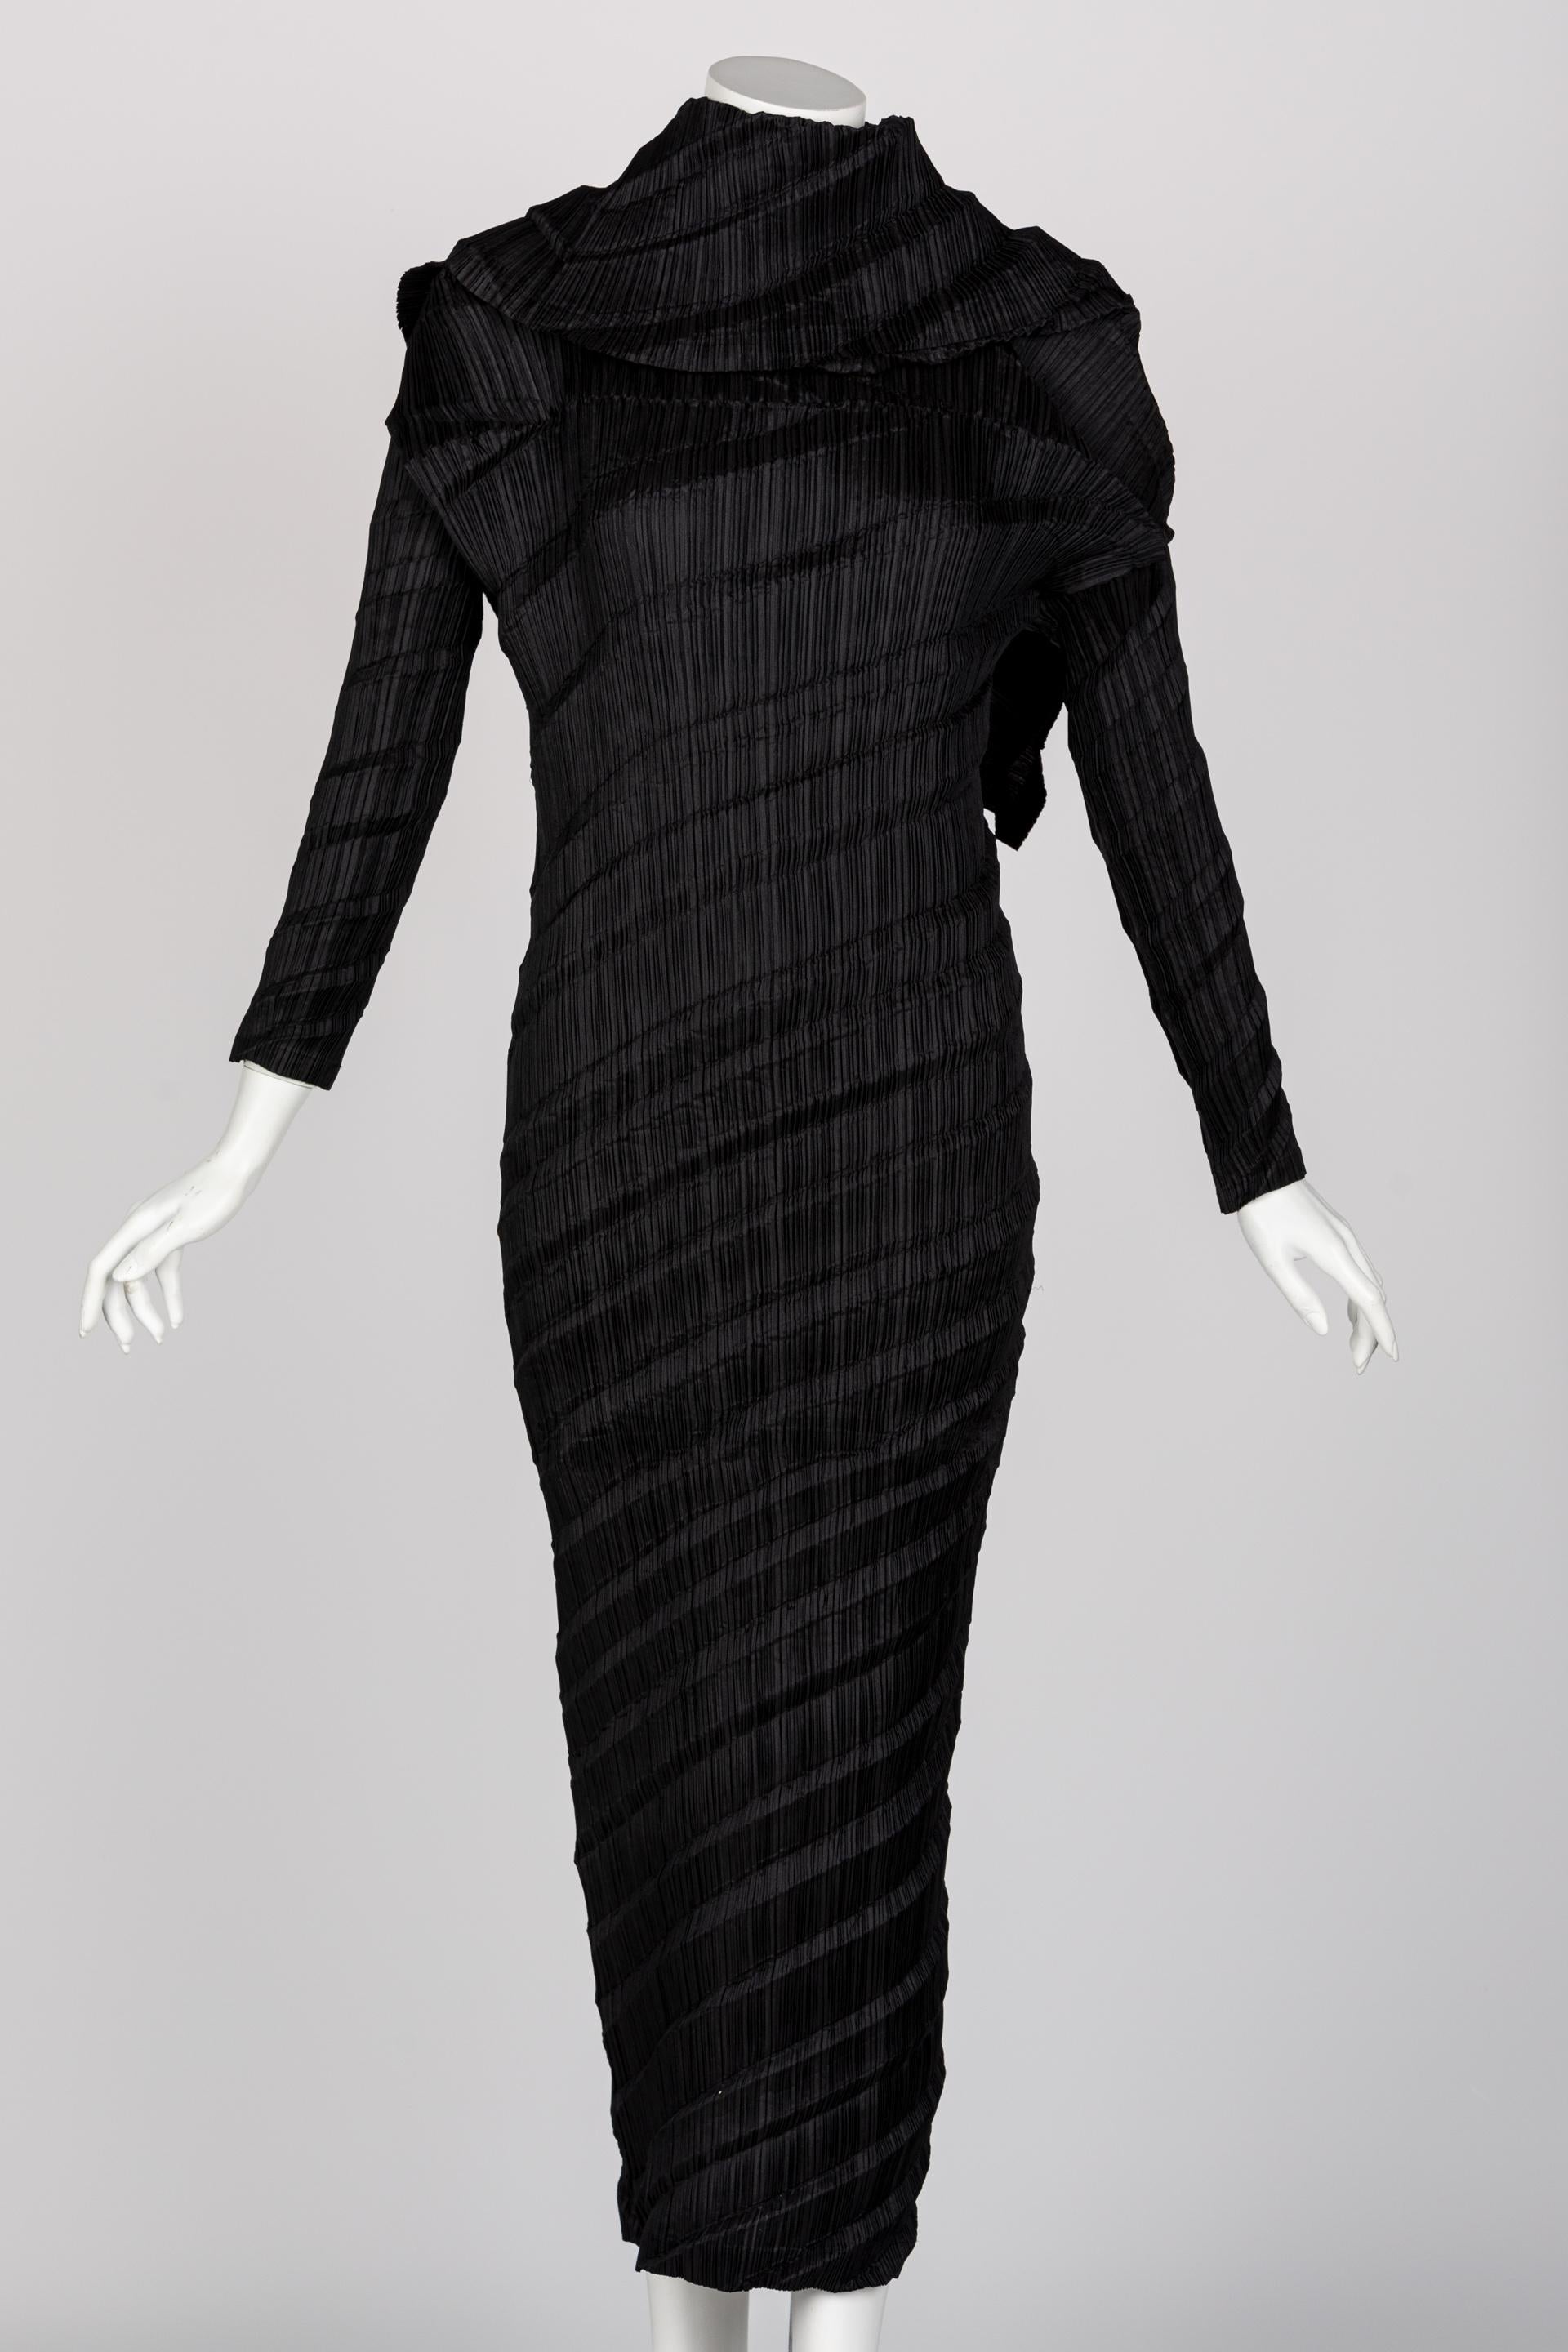 Issey Miyake Black Pleated Sculptural Dress, 1990s 6